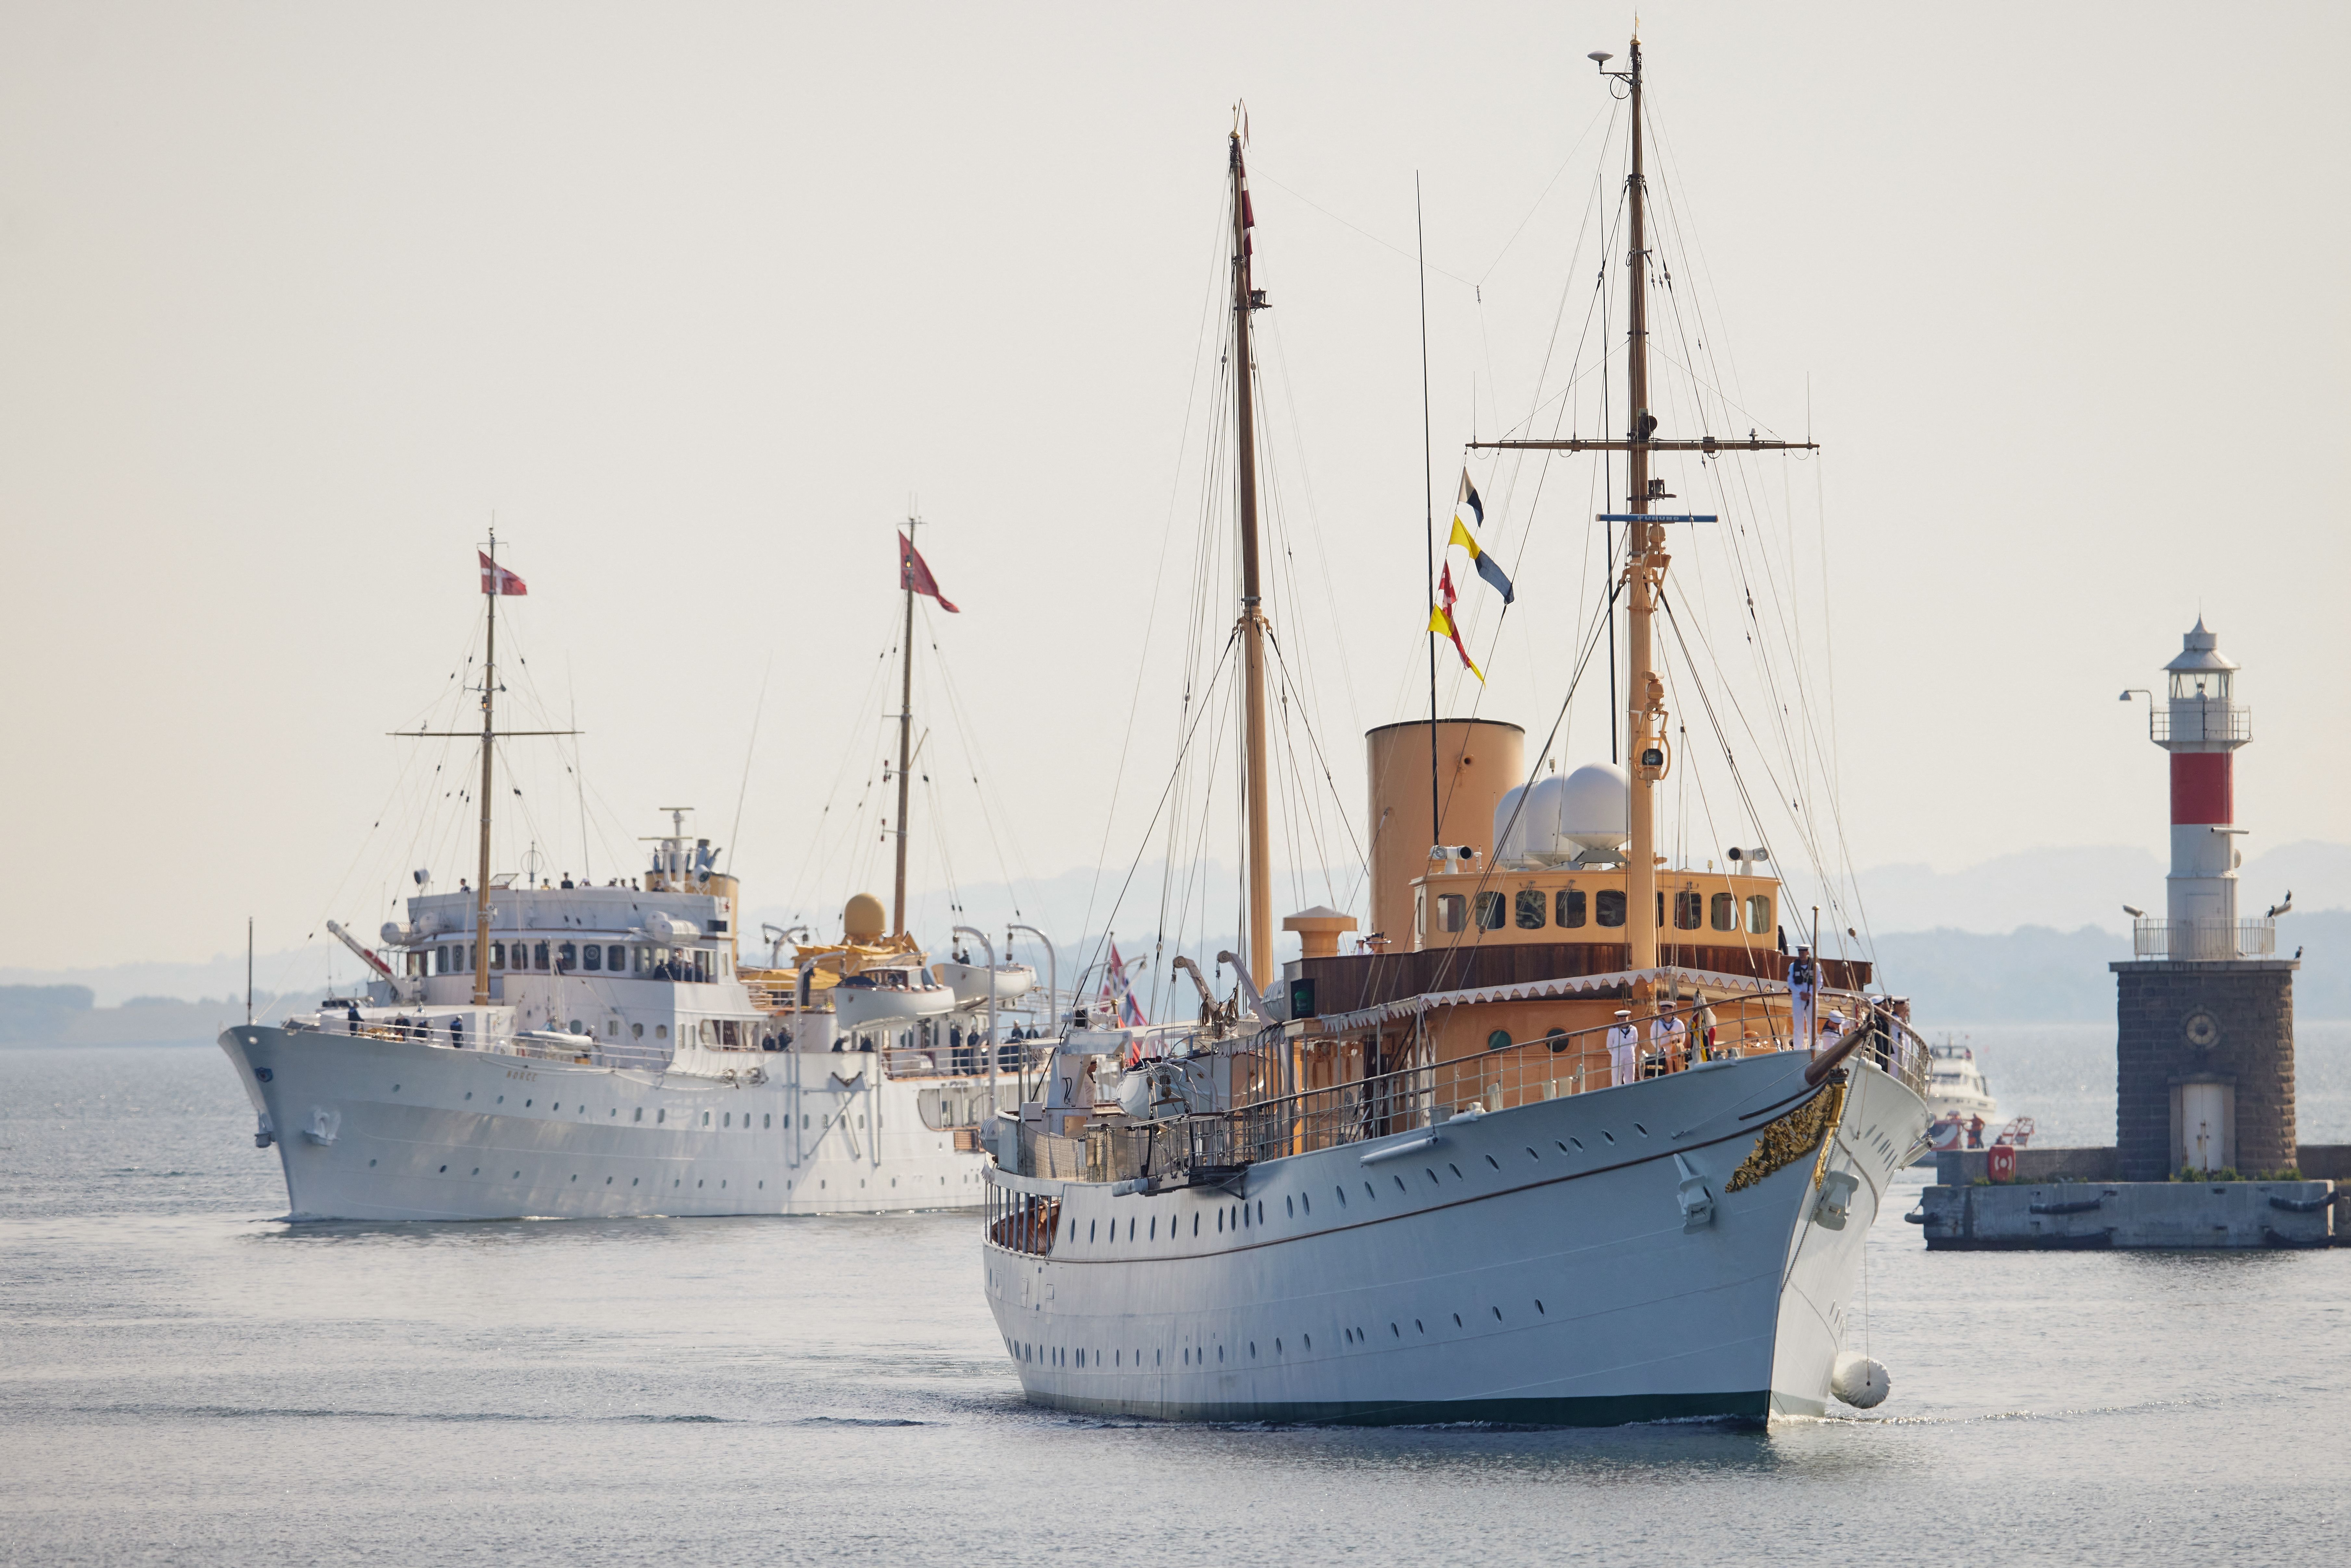 The Danish royal yacht Dannebrog